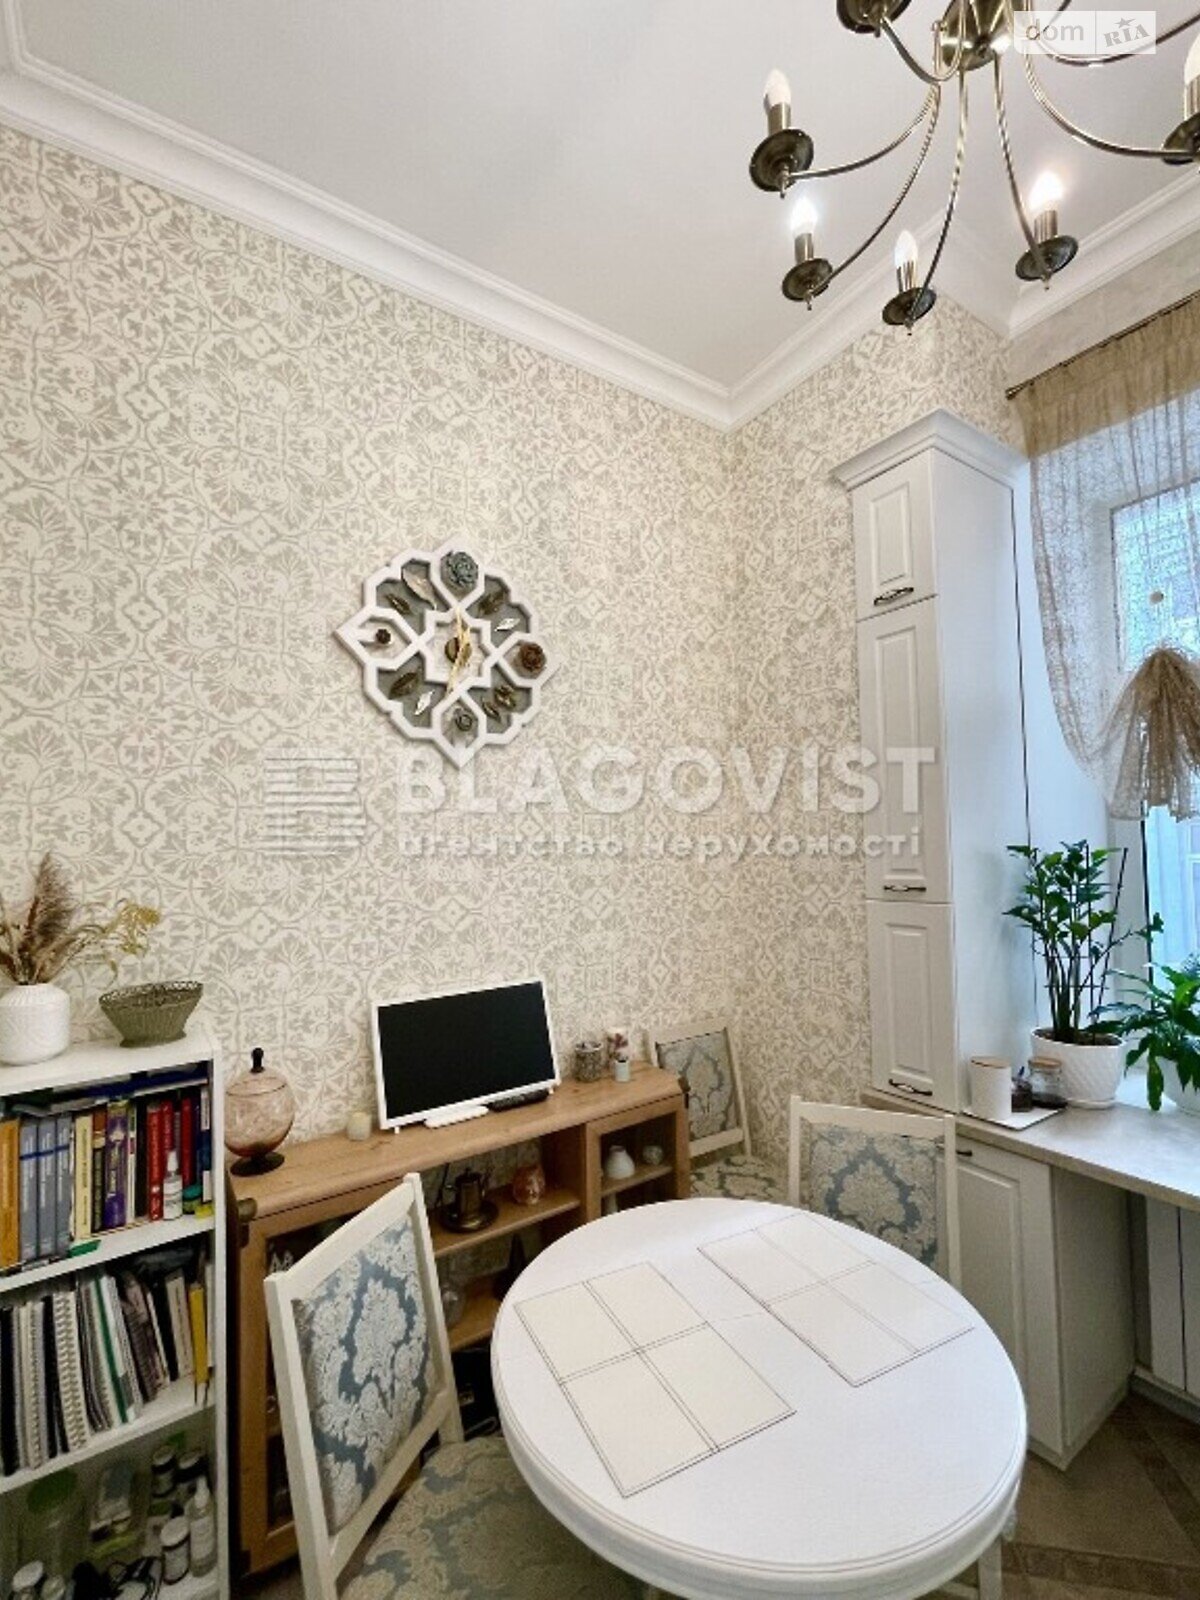 Продажа трехкомнатной квартиры в Киеве, на ул. Шота Руставели 32, район Печерский фото 1